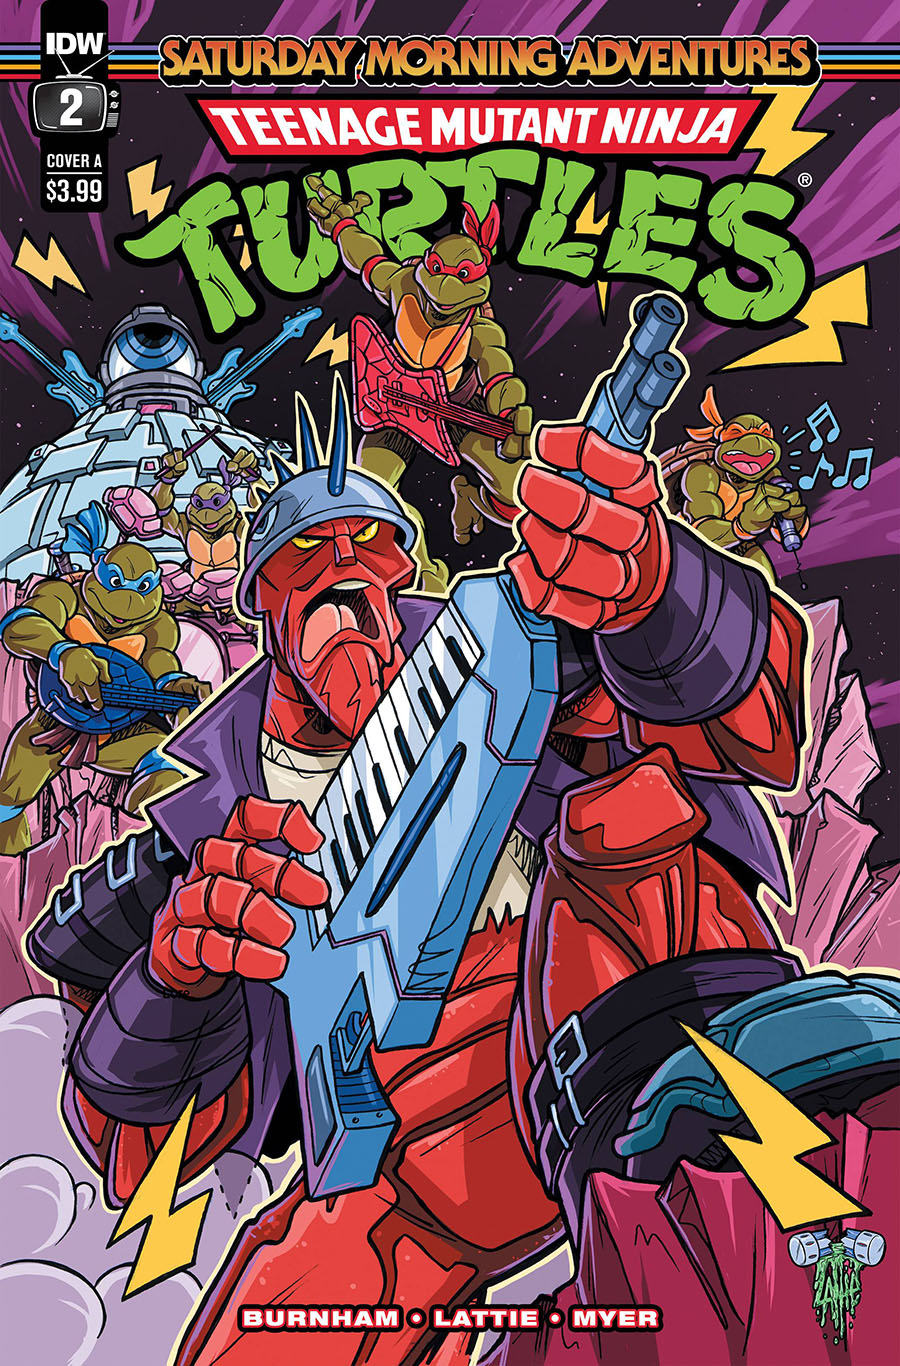 Teenage Mutant Ninja Turtles Saturday Morning Adventures #2 Cover A Regular Tim Lattie Cover